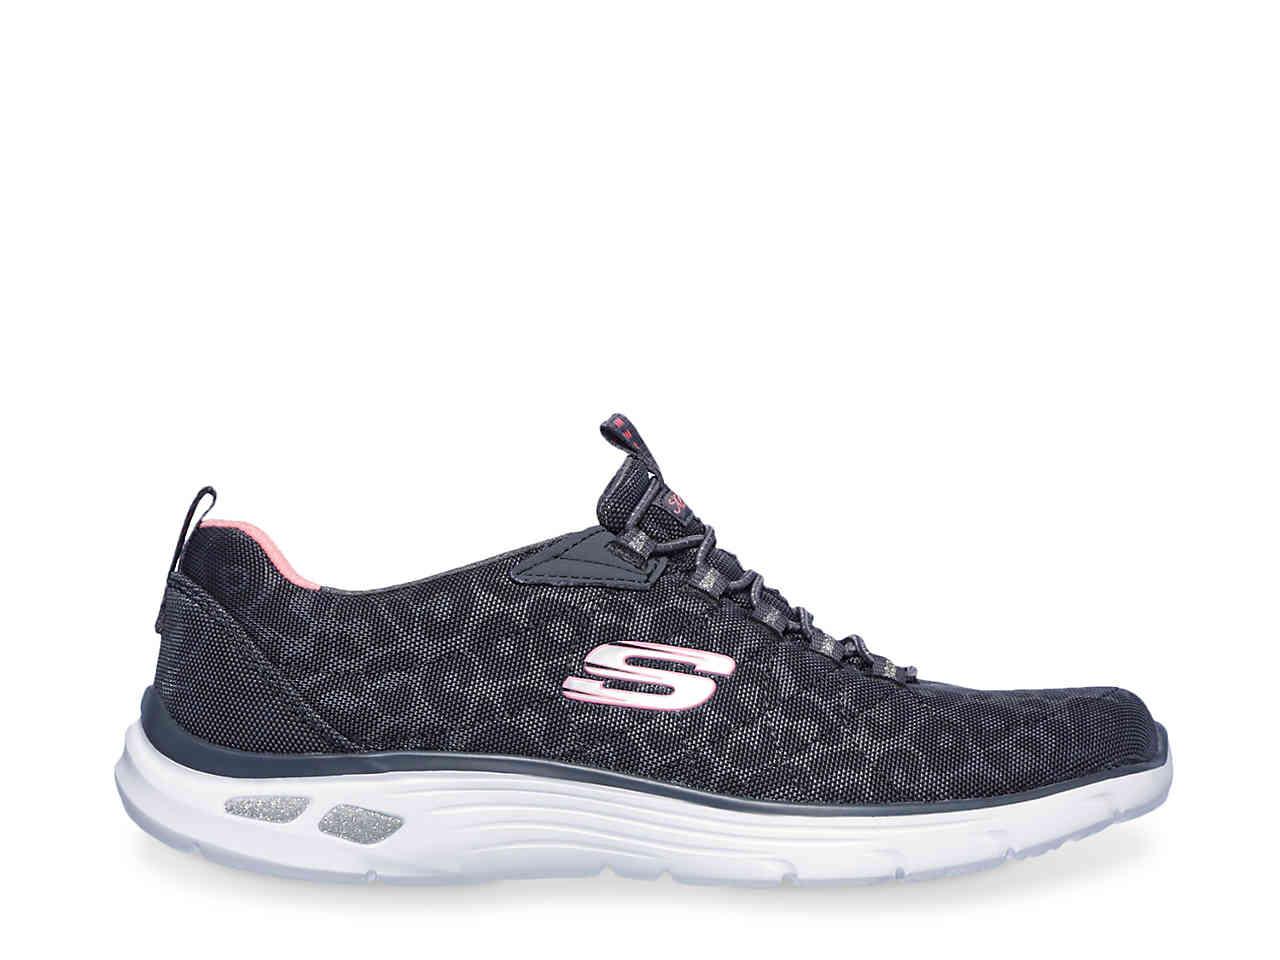 Skechers Synthetic Relaxed Empire Slip-on Sneaker in Leopard (Gray) - Lyst